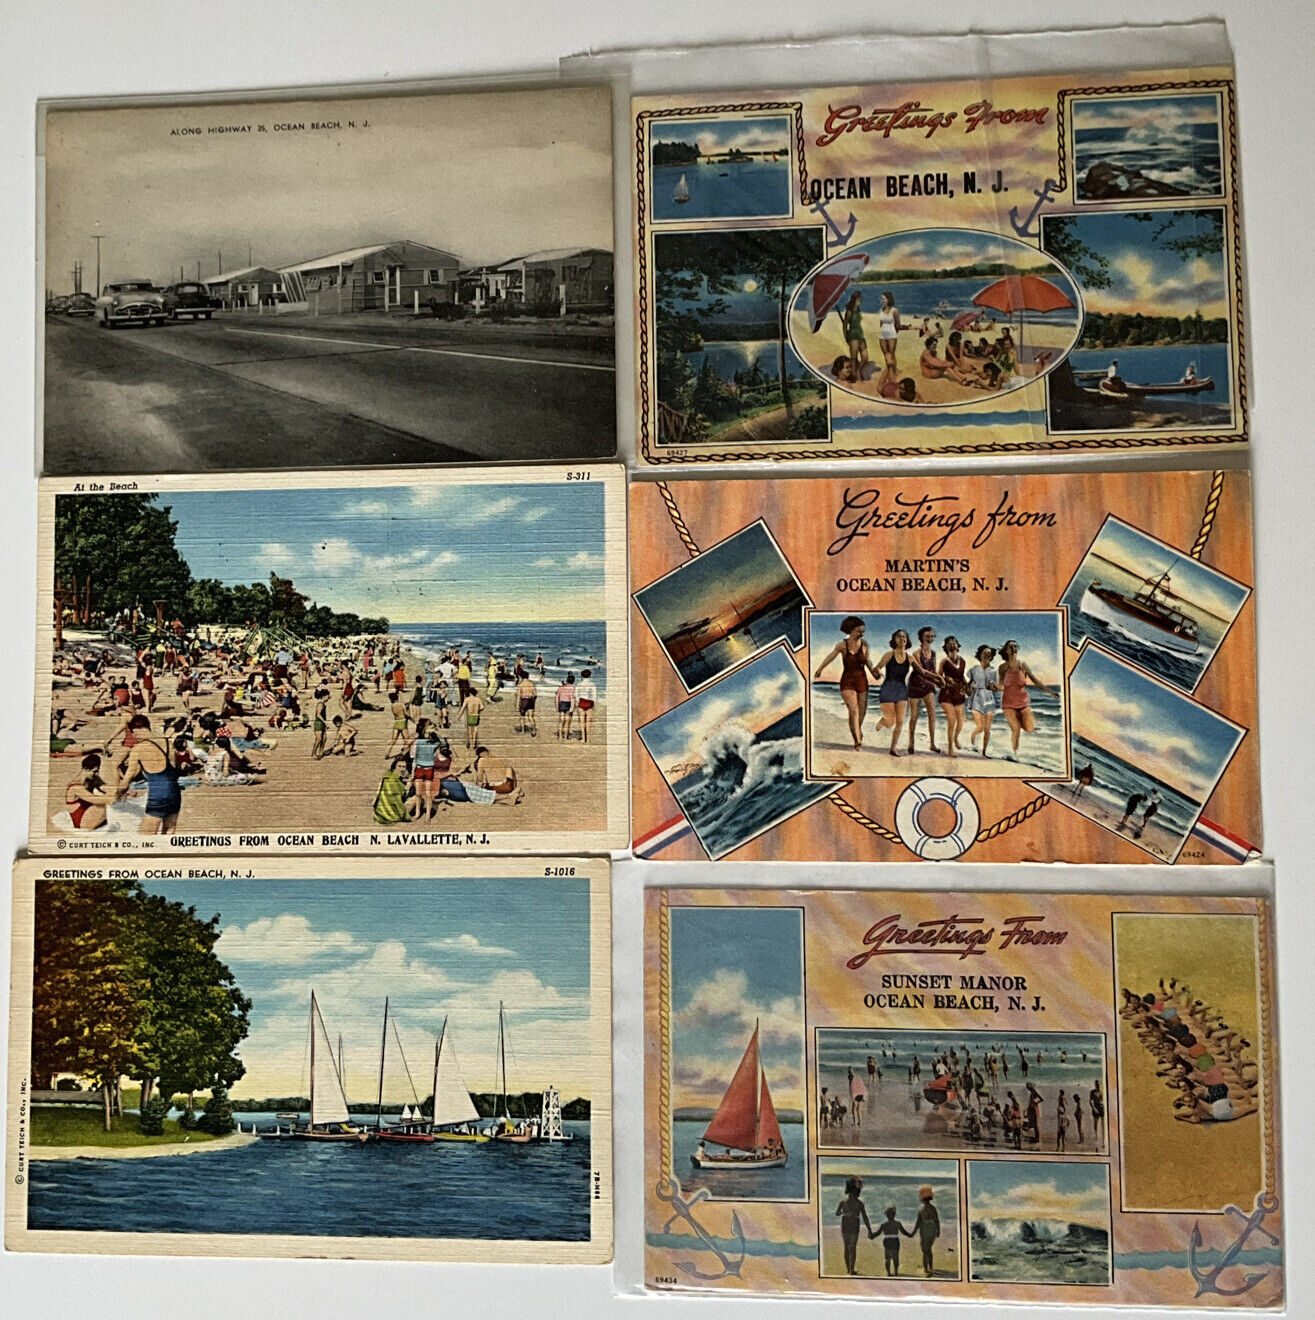 Ocean Beach, Tom’s River, N J ,1950’s,Beach , Greeting,sunset Manor,Martins,sail